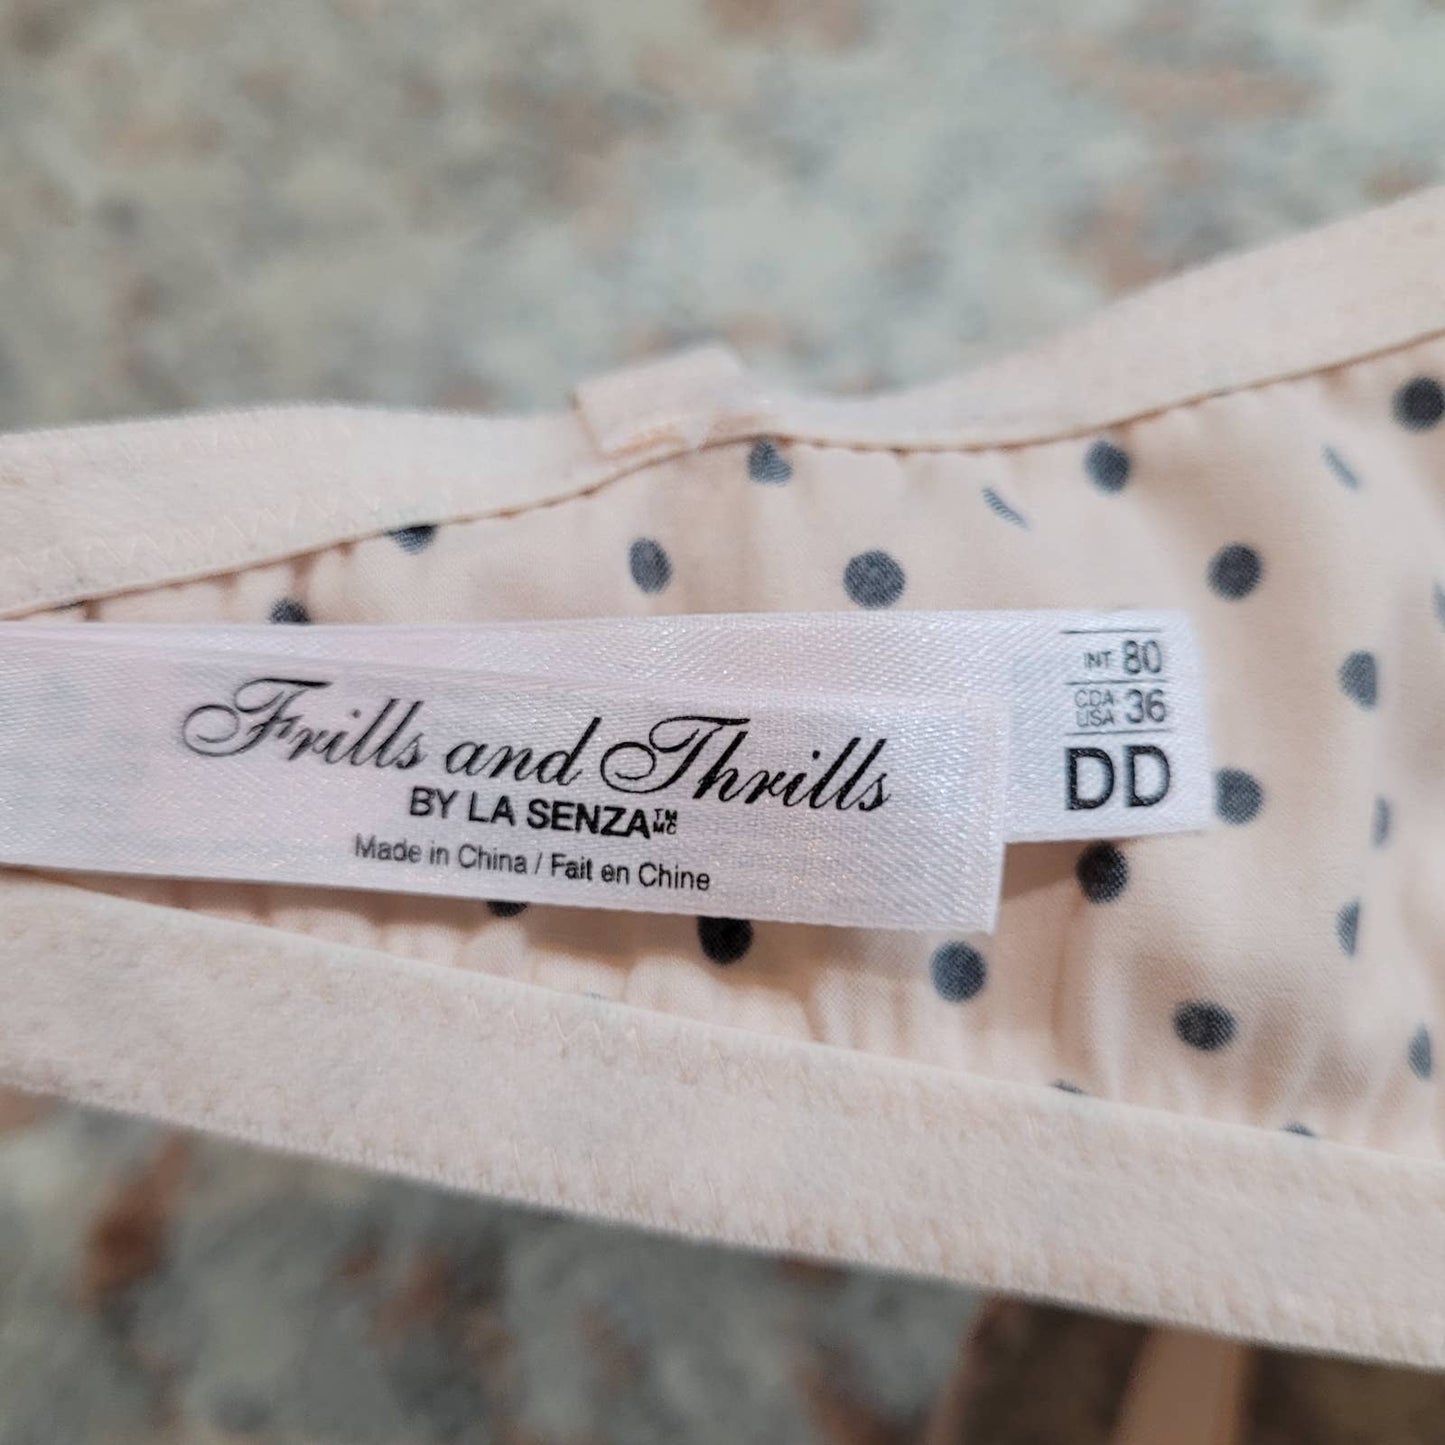 Frills and Thrills by La Senza Polka Dot Lace Bra - Size 36DD